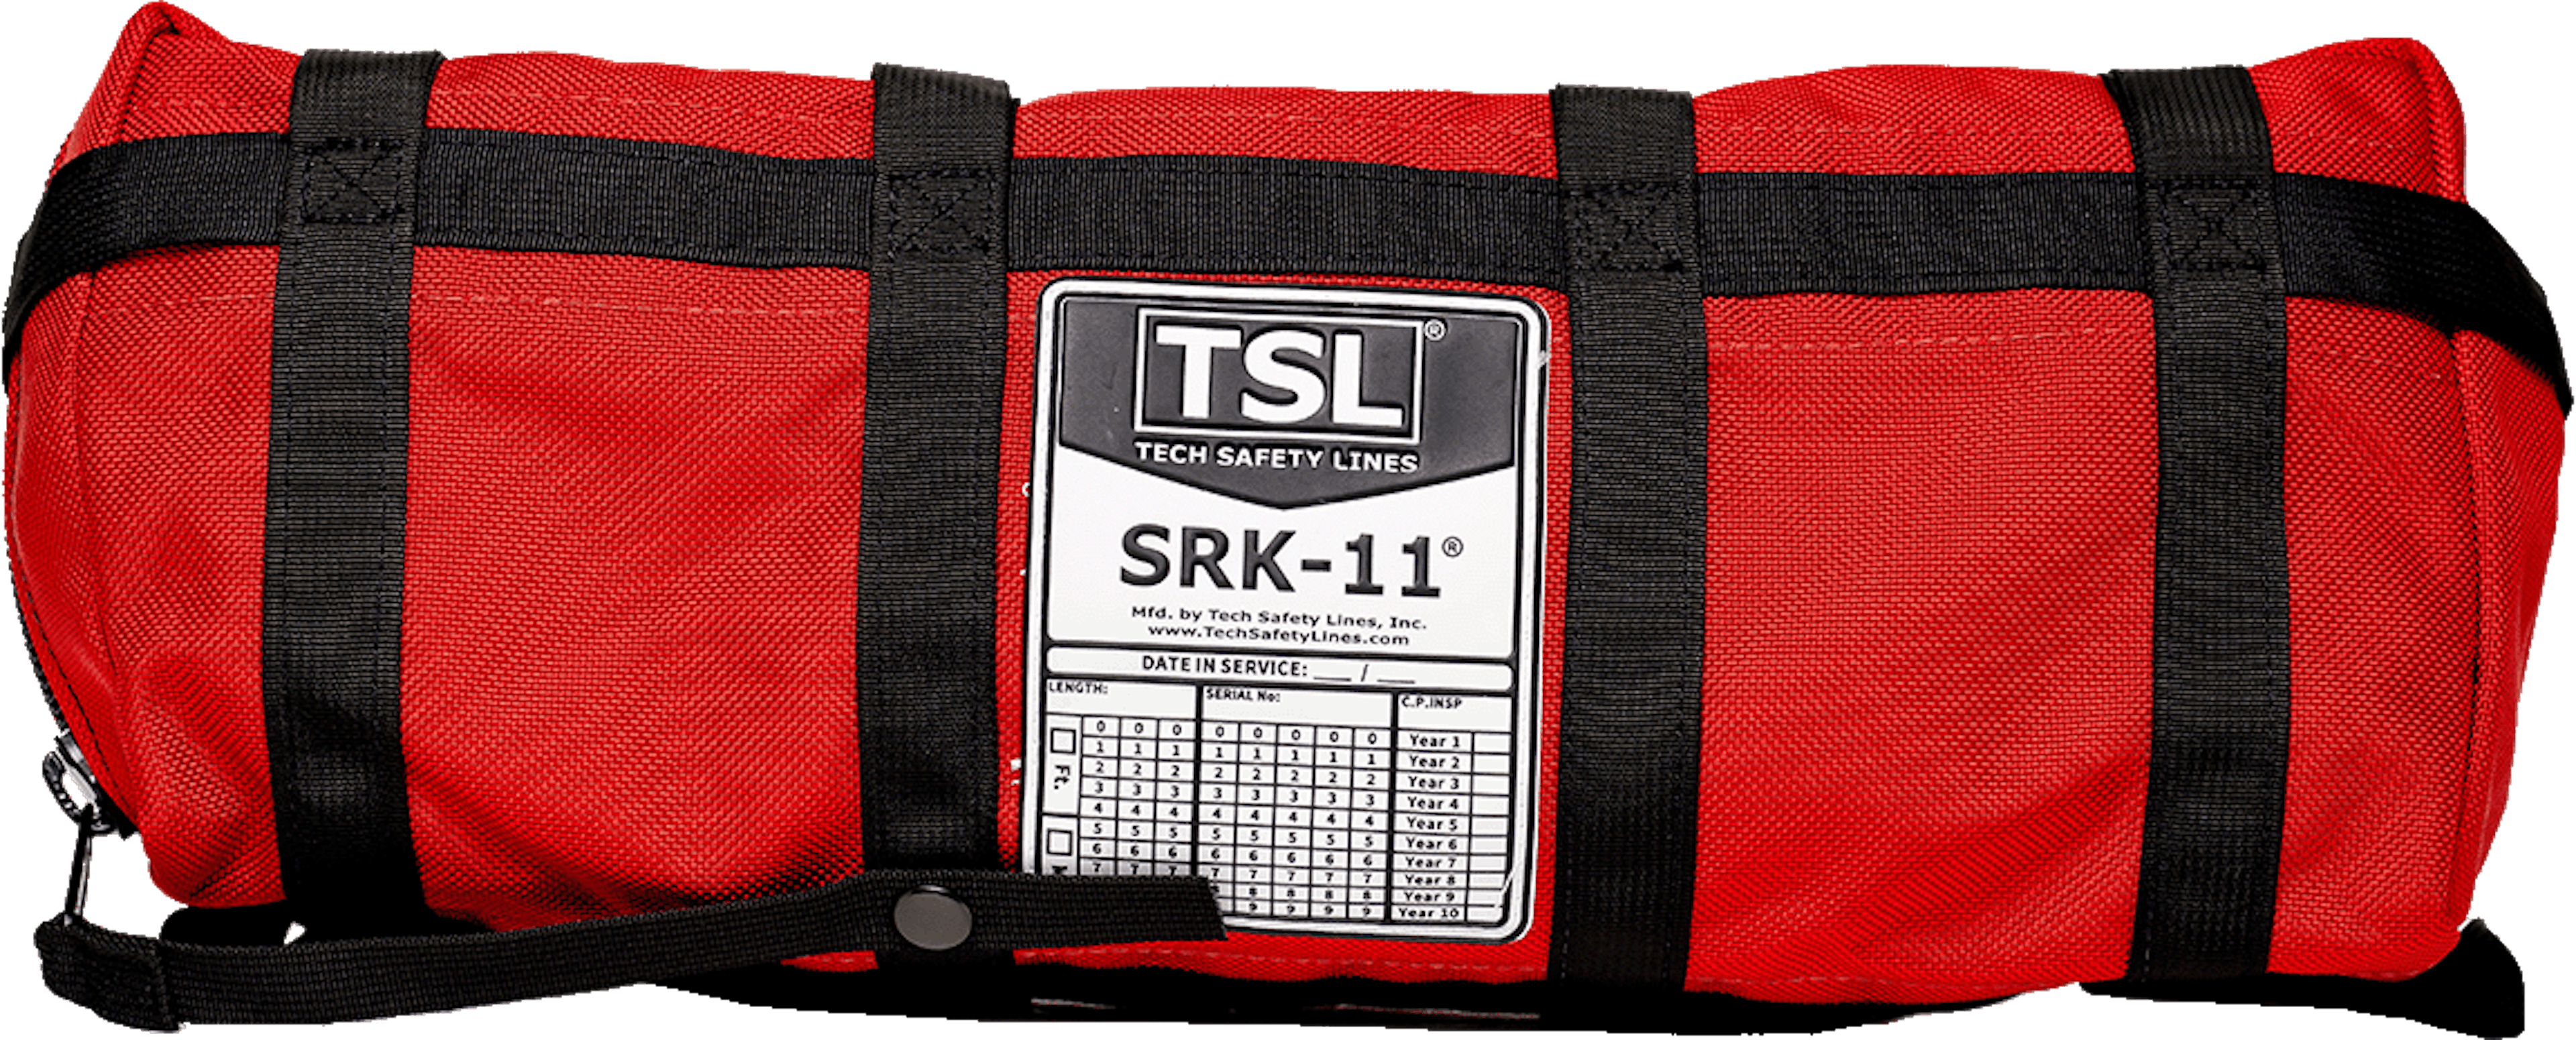 srk 11 kit bag front view